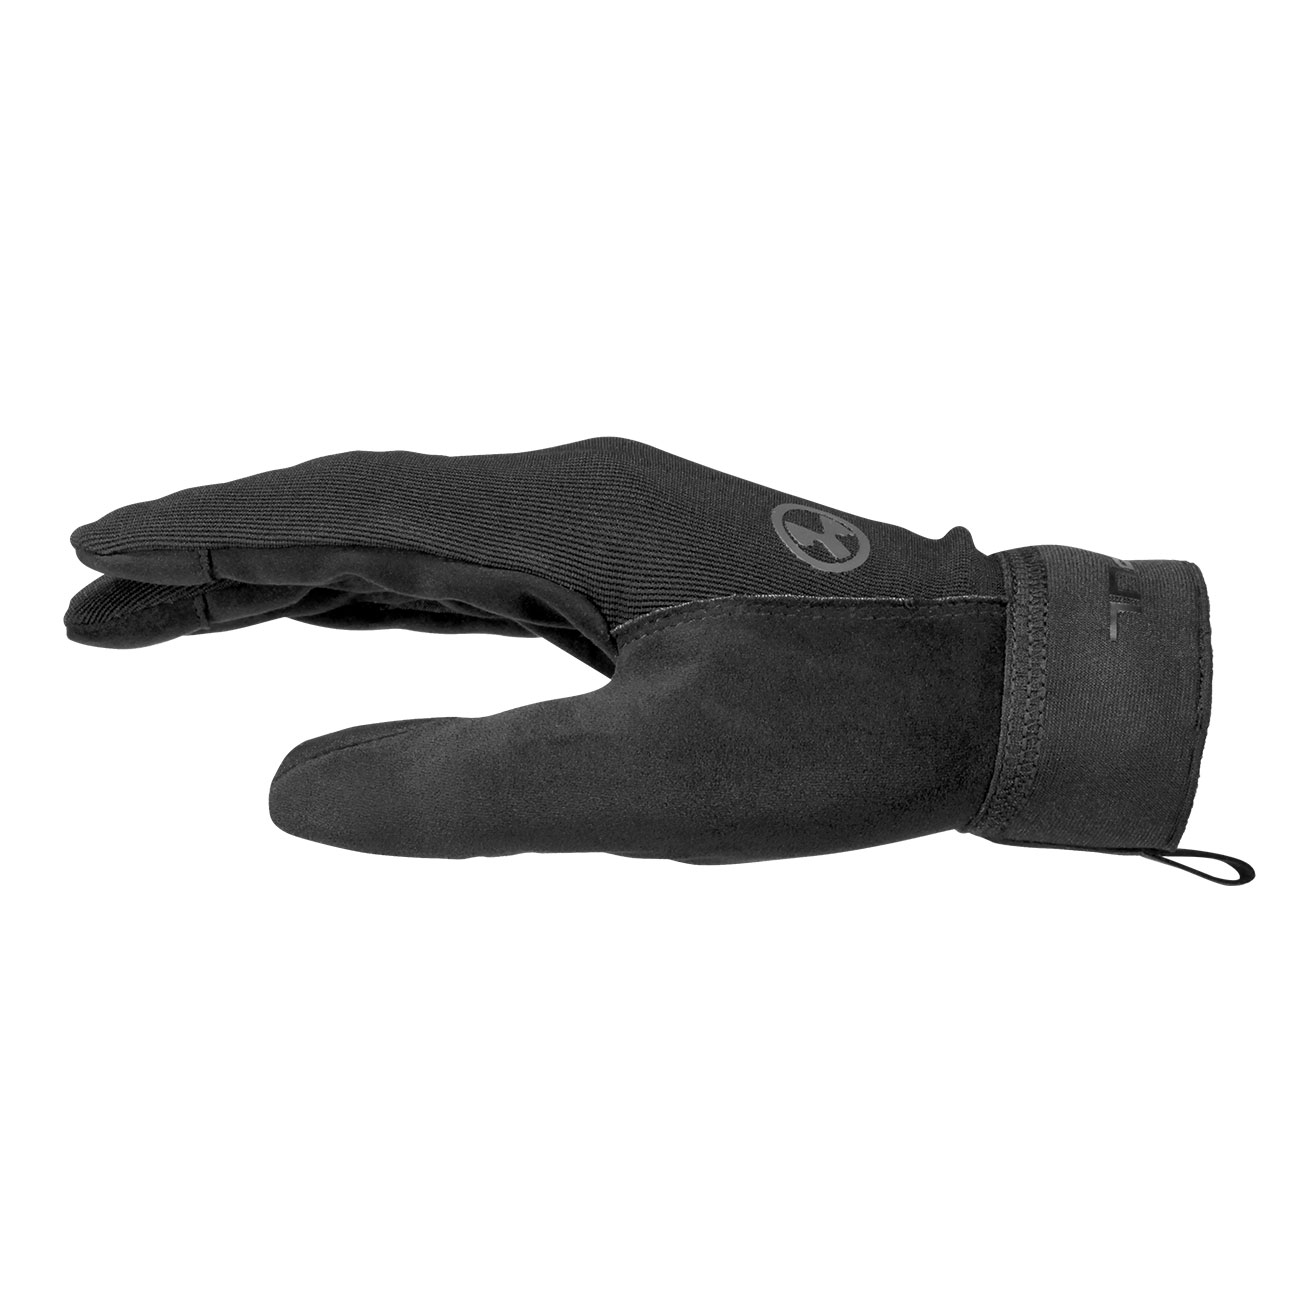 MagPul USA Technical Glove 2.0 Handschuh schwarz Bild 4